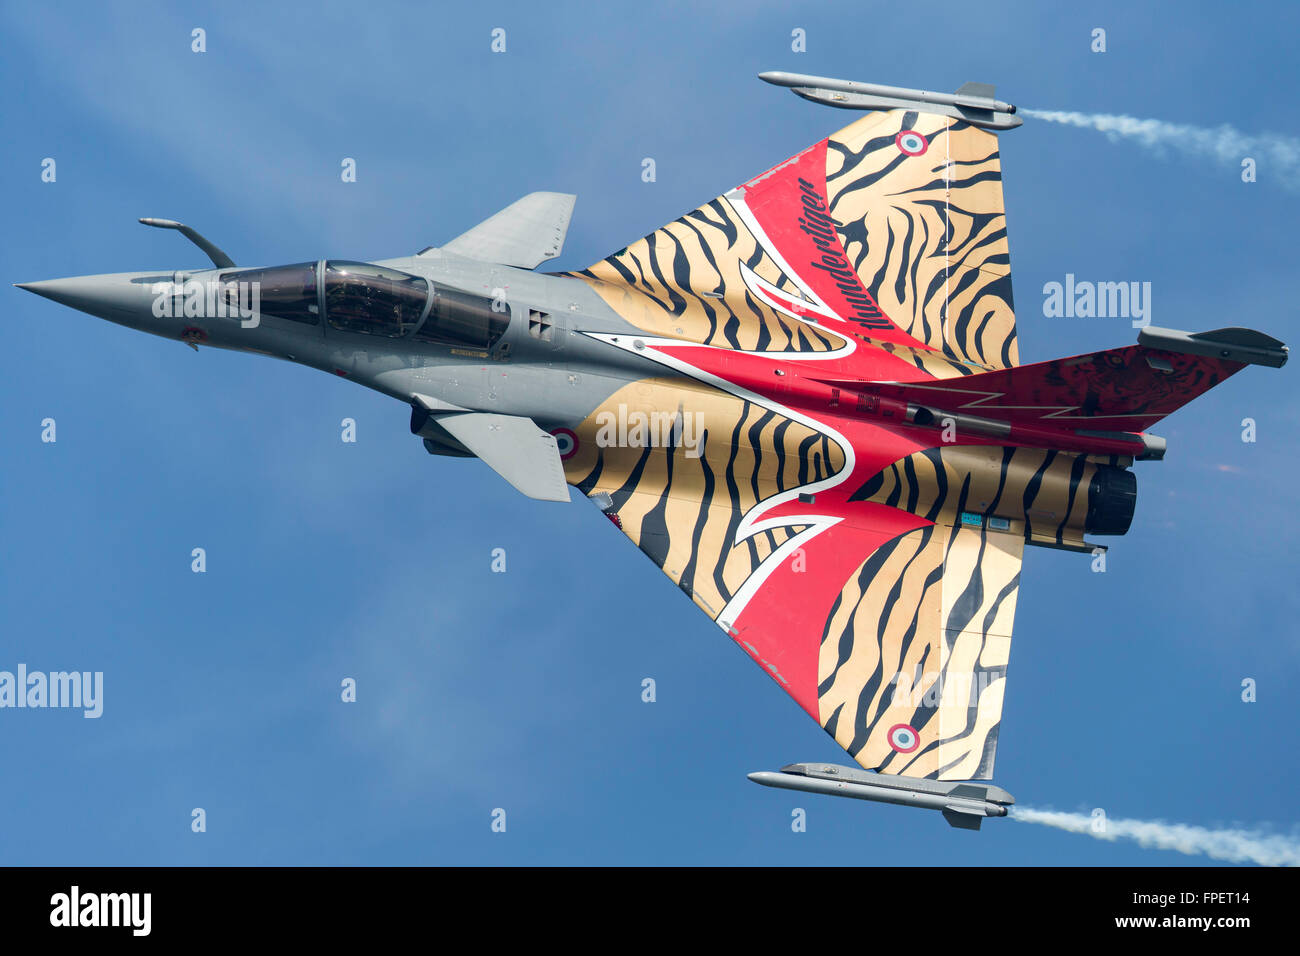 French Air Force (armée de l'air) Dassault Rafale multirole fighter aircraft. Banque D'Images